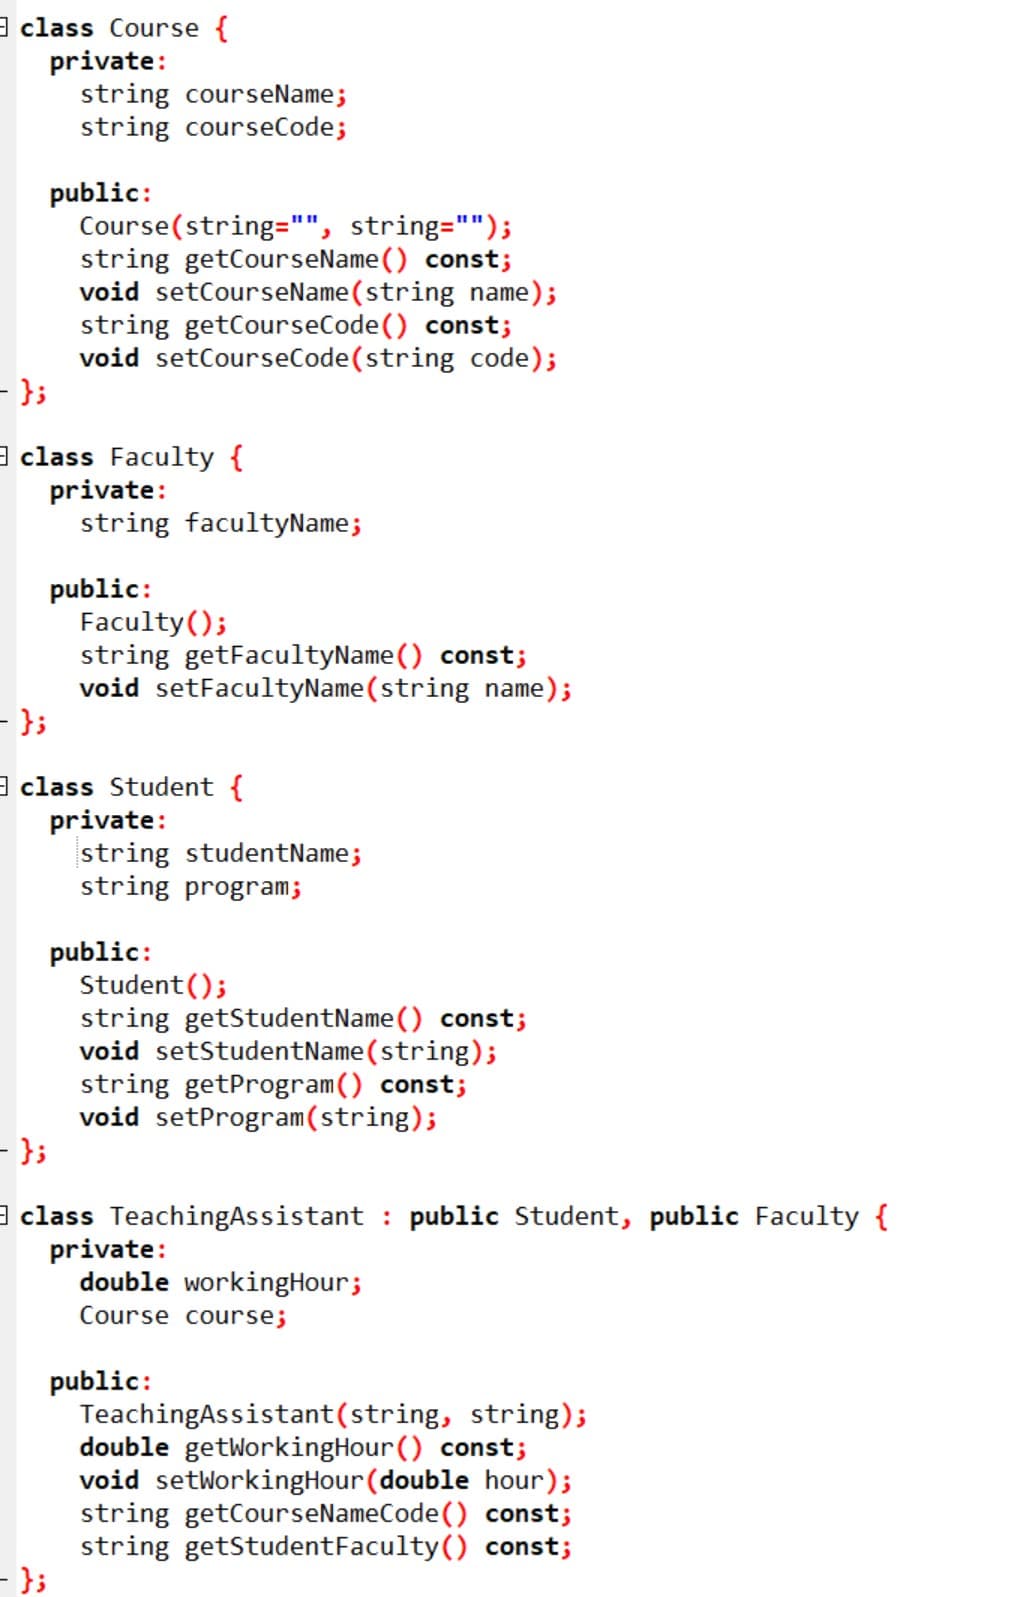 class Course {
private:
- };
- };
string courseName;
string courseCode;
public:
class Faculty {
private:
Course(string="", string="");
string getCourseName() const;
void setCourseName(string name);
string getCourseCode() const;
void setCourseCode (string code);
- };
string facultyName;
public:
Faculty();
string getFacultyName() const;
void setFacultyName(string name);
class Student {
private:
string studentName;
string program;
public:
Student ();
string getStudentName() const;
void setStudentName(string);
string getProgram () const;
void setProgram (string);
- };
class TeachingAssistant public Student, public Faculty {
private:
double workingHour;
Course course;
public:
Teaching Assistant(string, string);
double getWorkingHour () const;
void setWorking Hour (double hour);
string getCourseNameCode() const;
string getStudent Faculty() const;